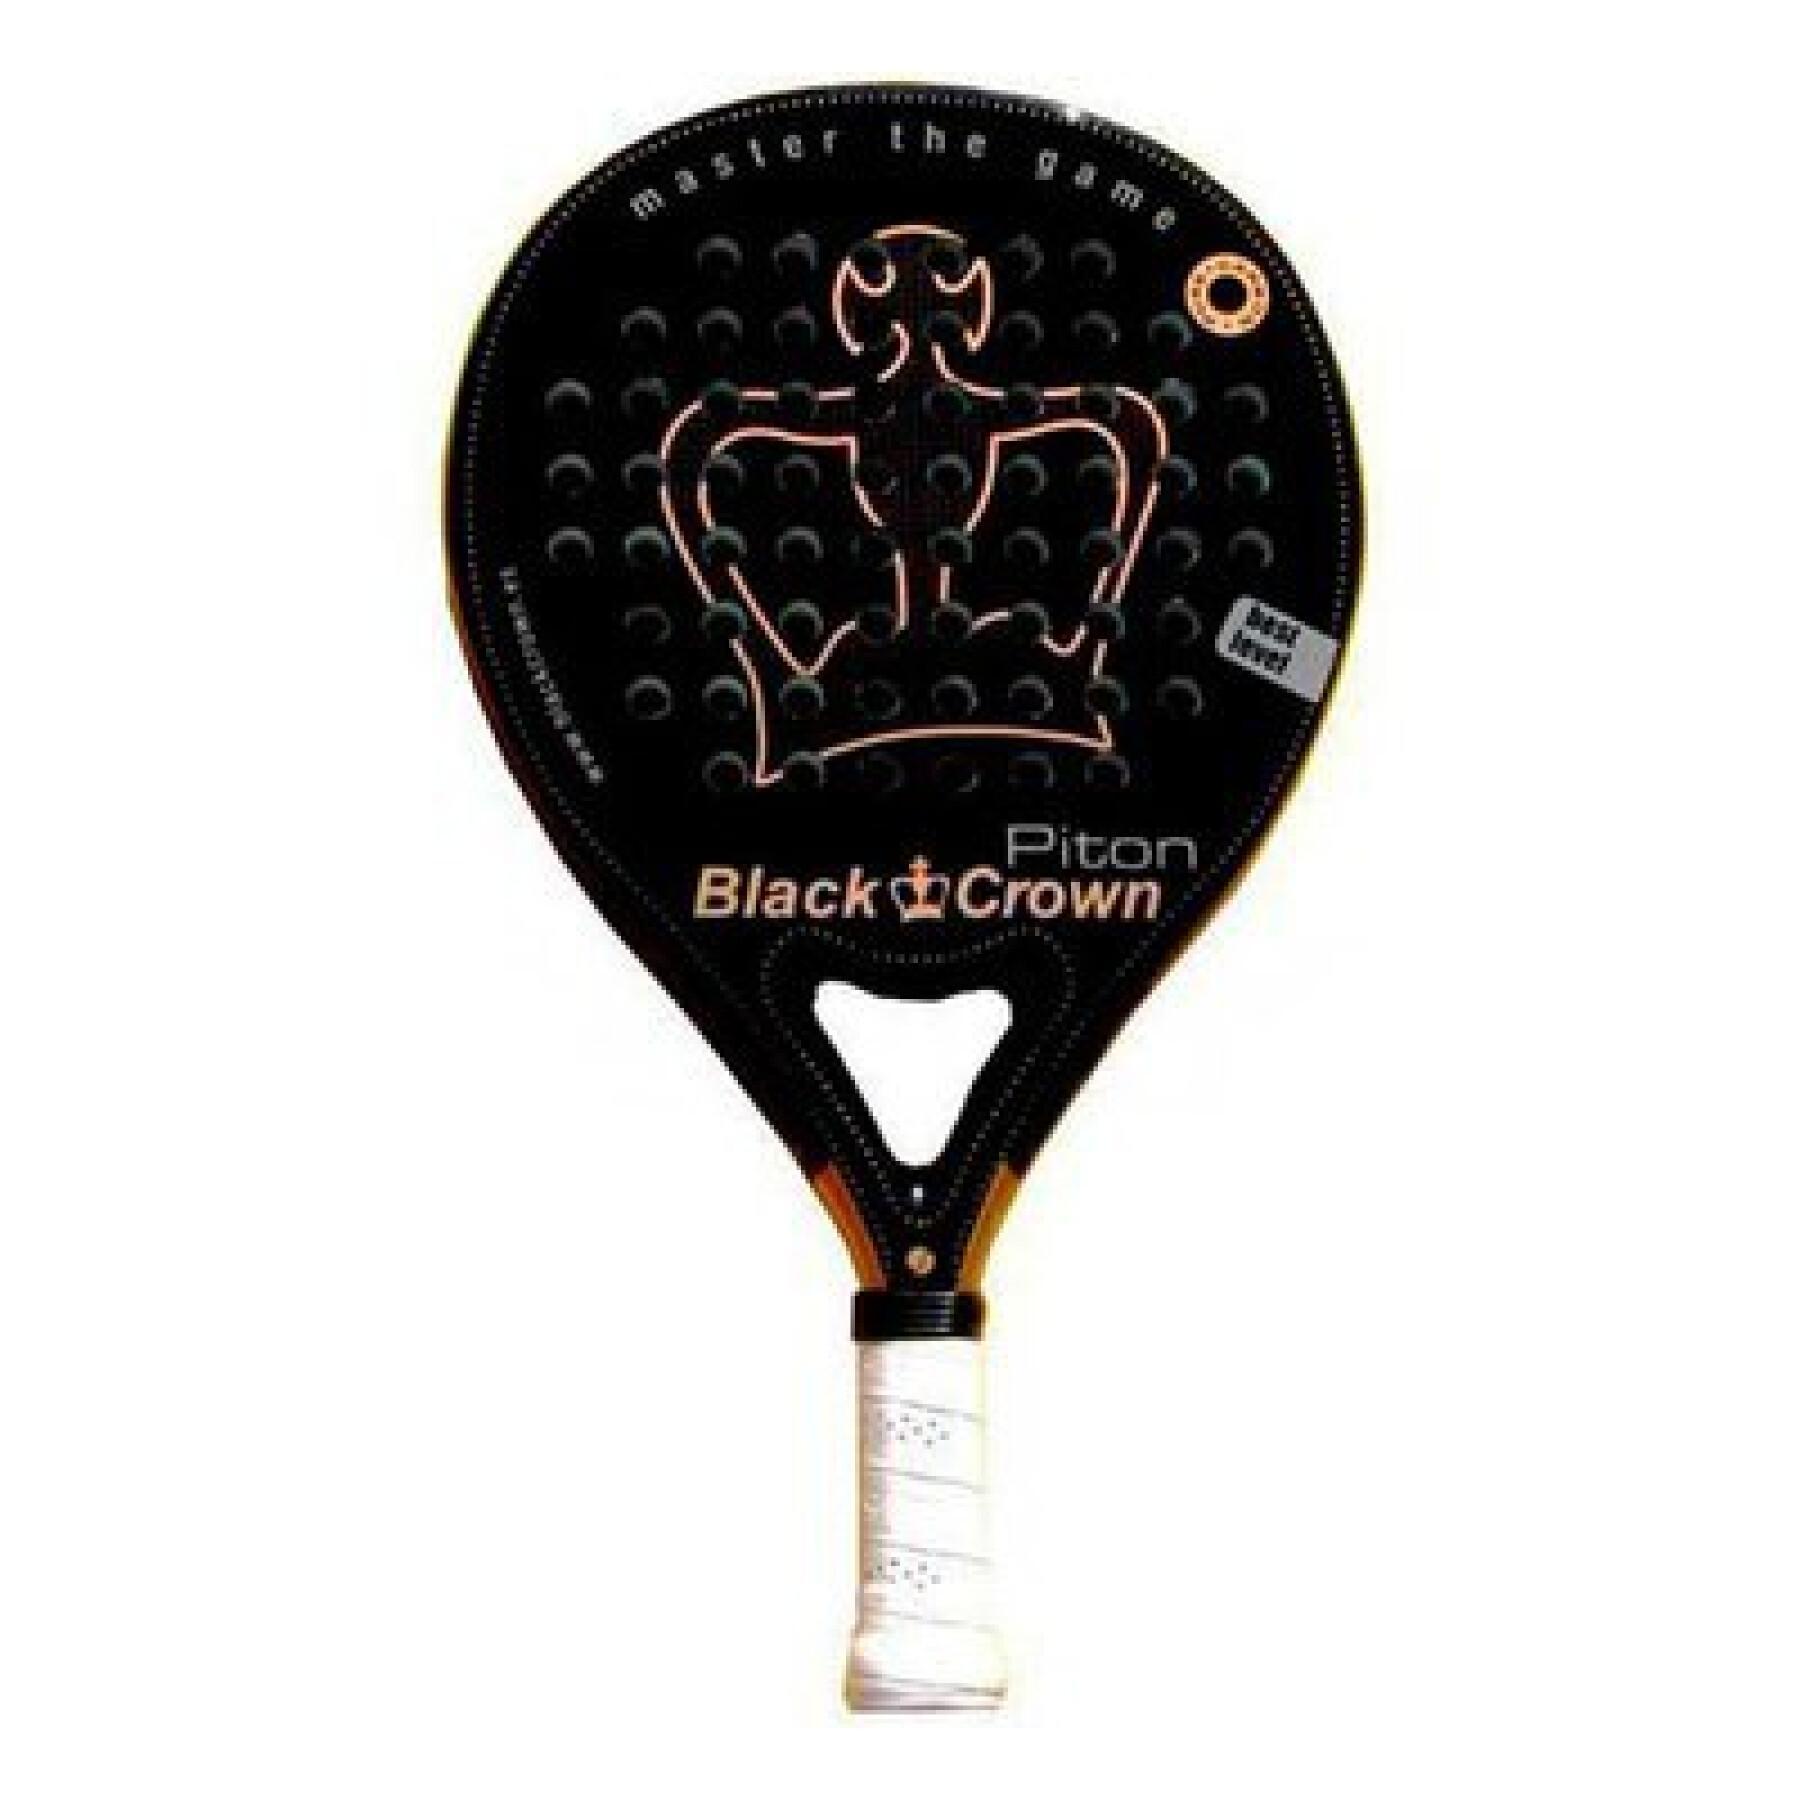 Paddle Tennisracket Black Crown Piton